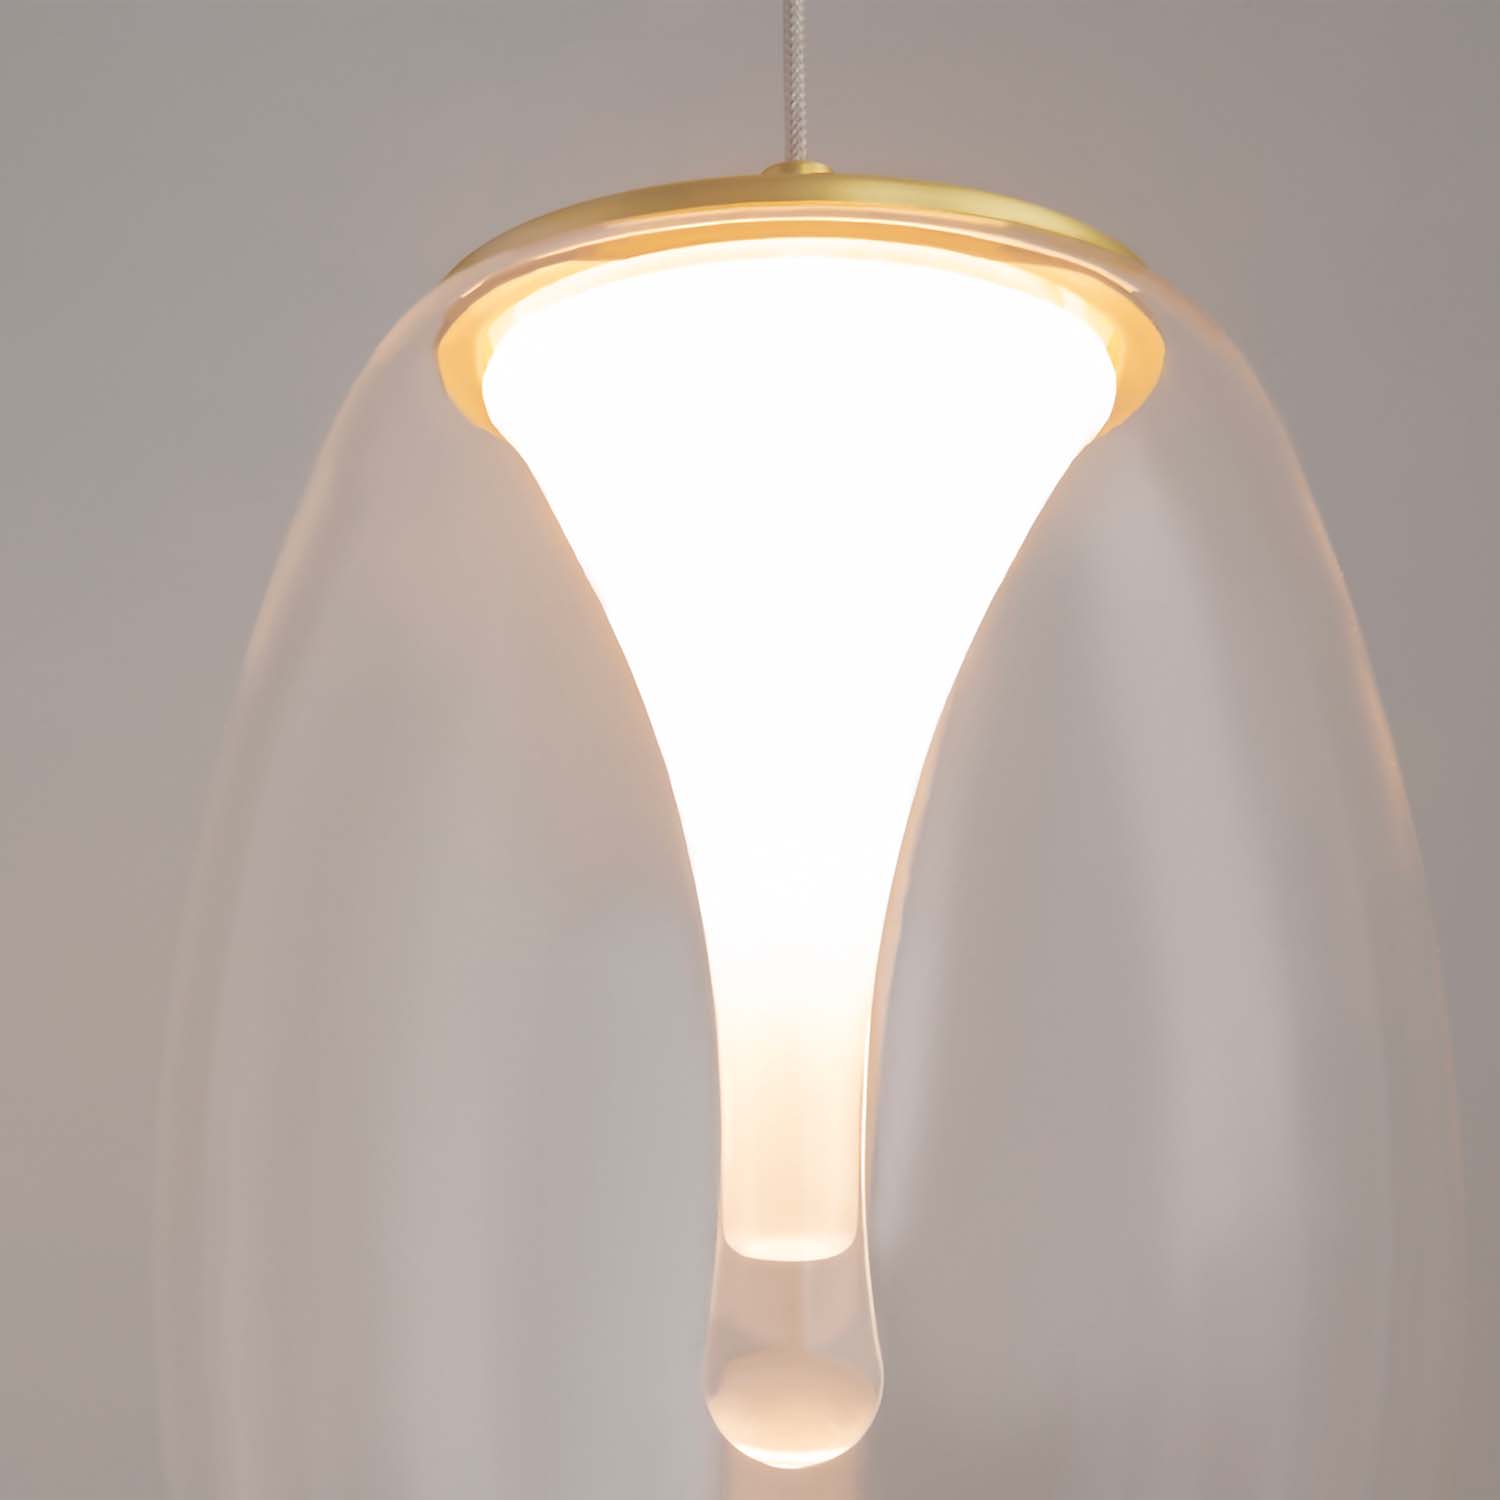 SPLASH - Designer glass pendant light with integrated LED